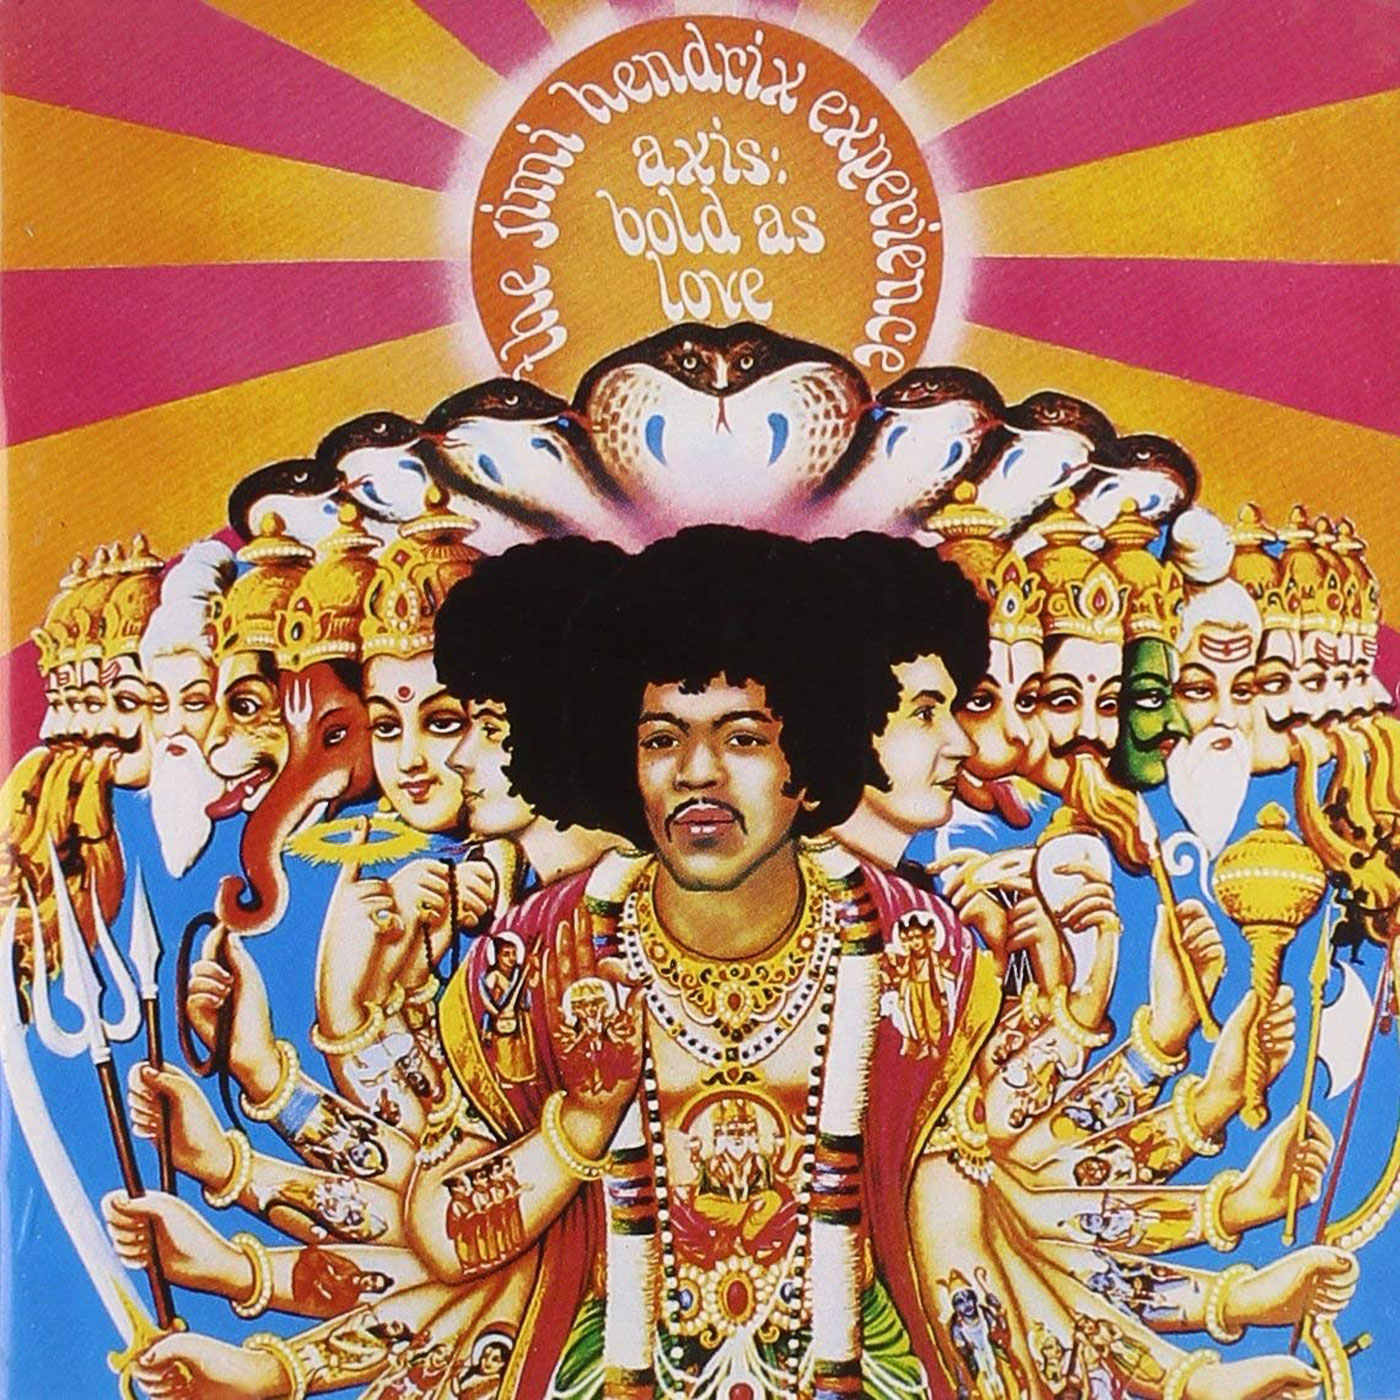 105 The Jimi Hendrix Experience – Axis – Bold as Love